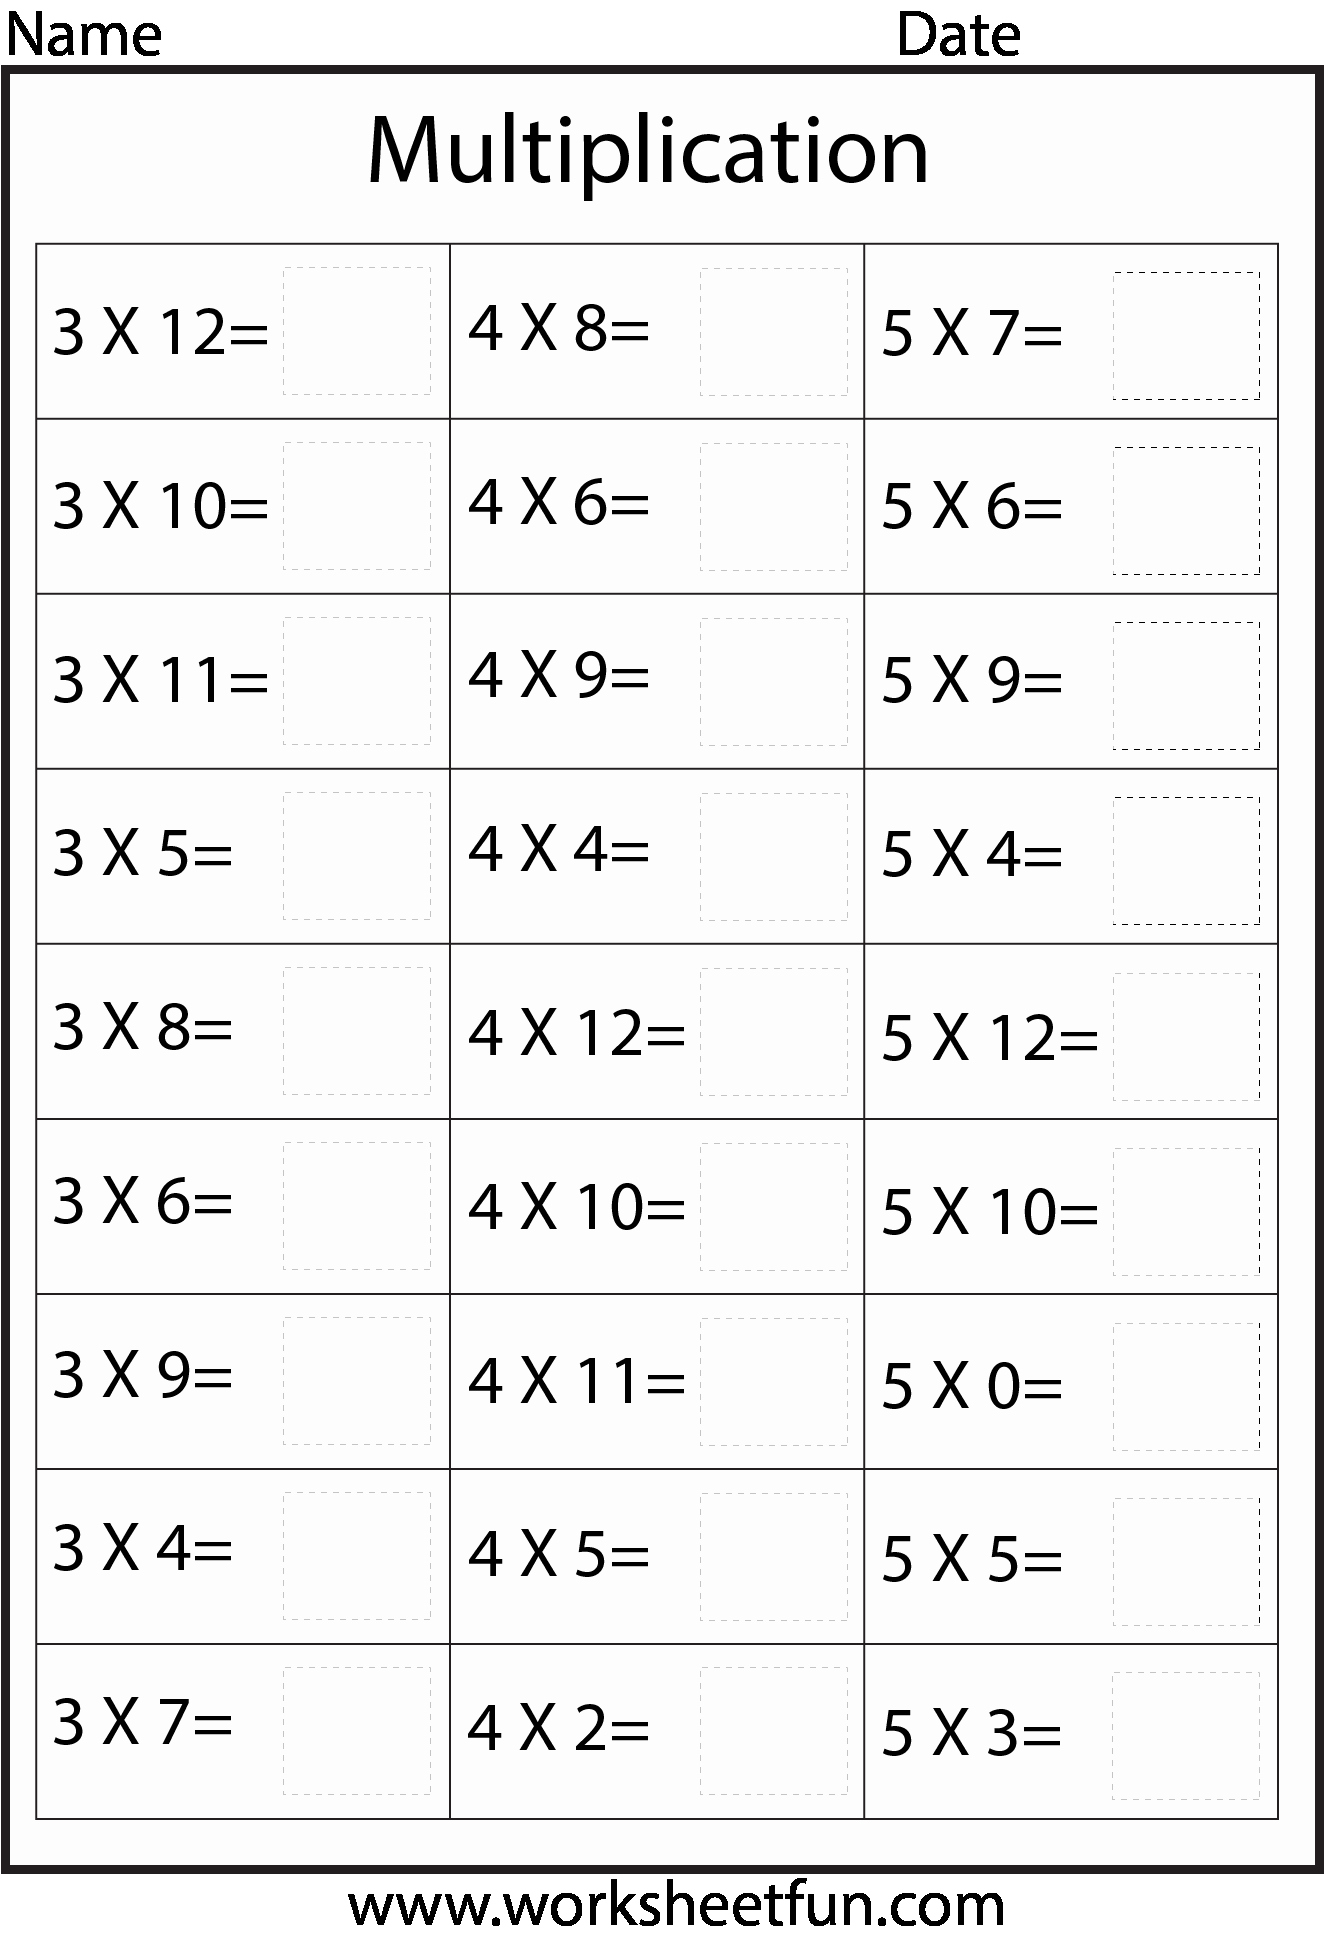 Multiplication Table Worksheet Elegant Multiplication – Mixed Times Tables – Ten Worksheets